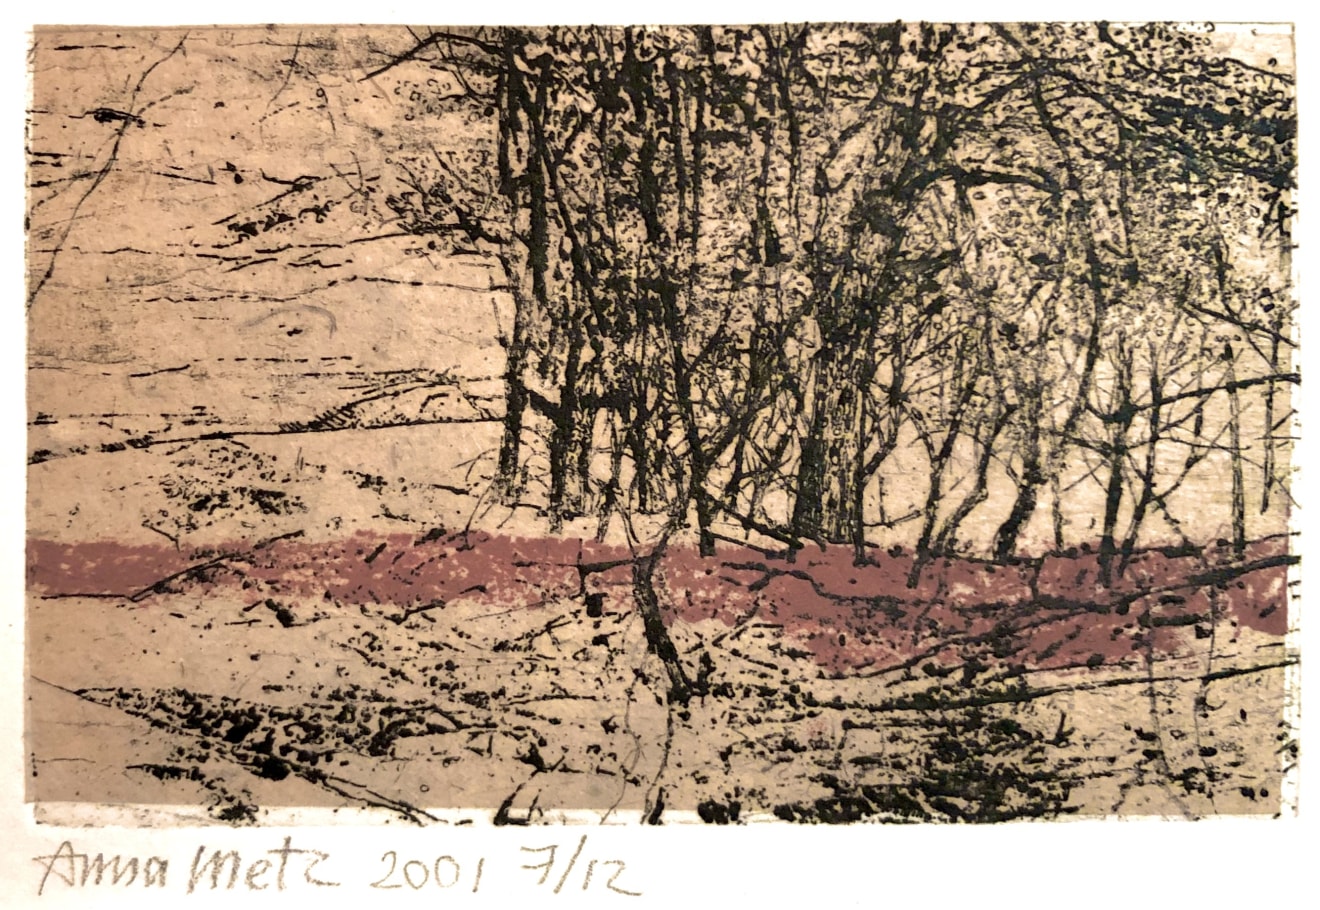 Anna Metz, Rode pad (Chemin rouge), 2001